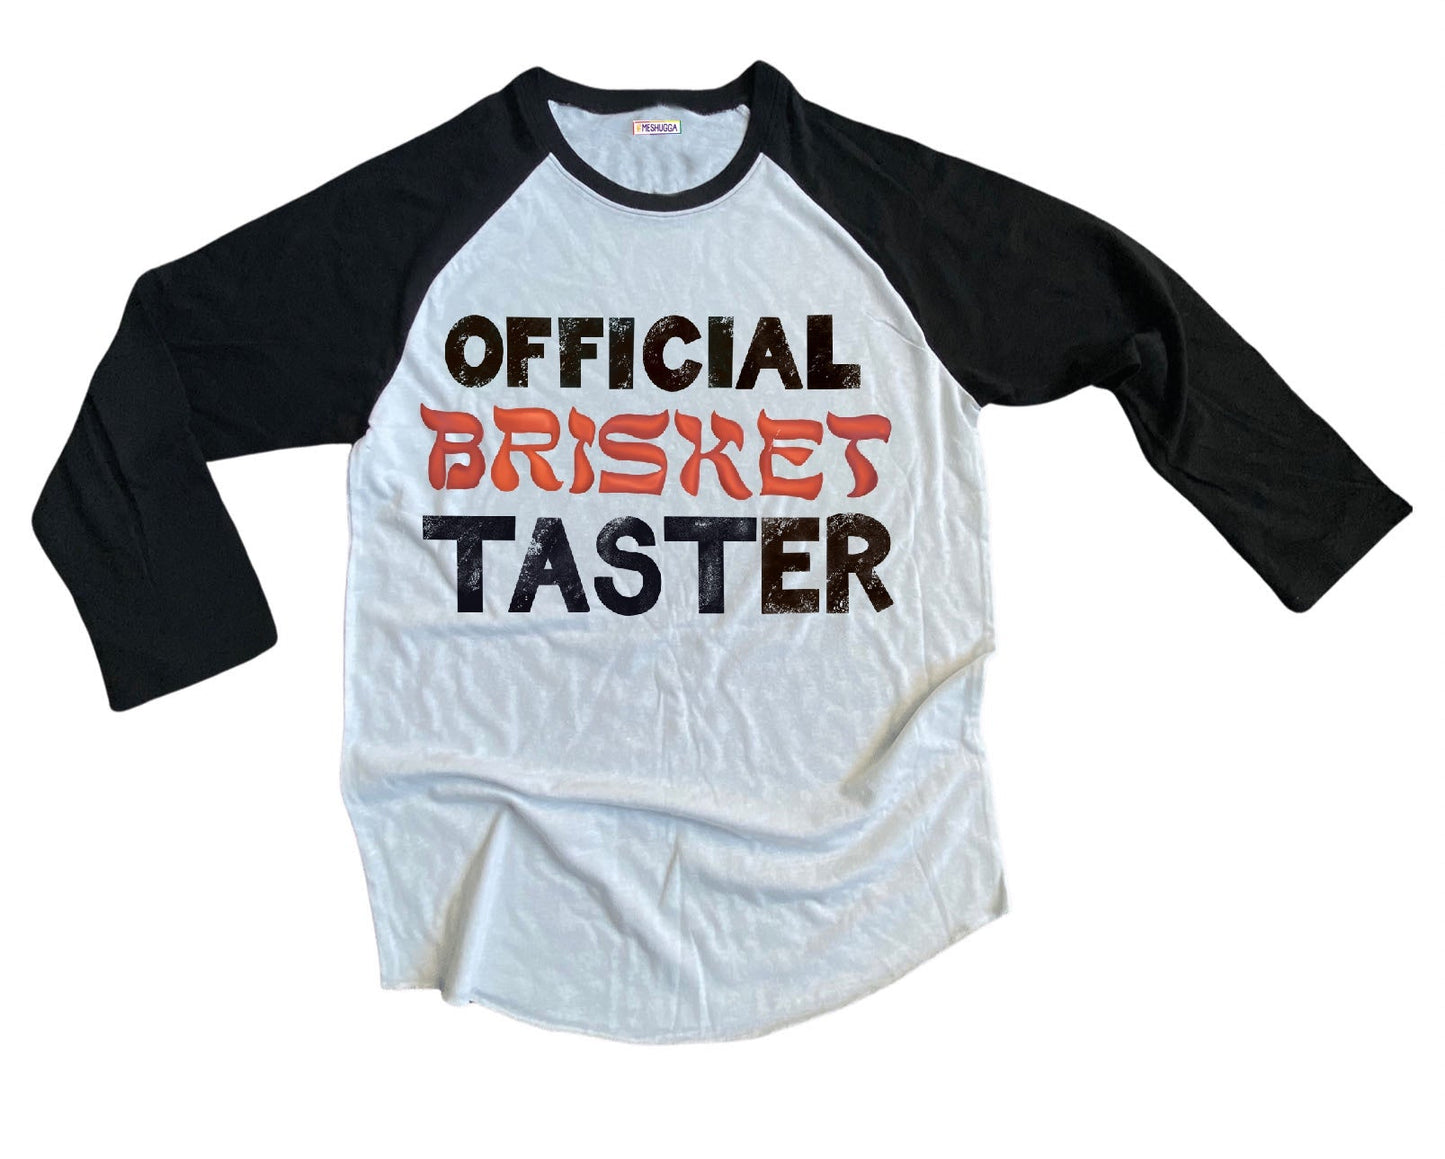 Official Brisket Taster Baseball Shirt - Youth